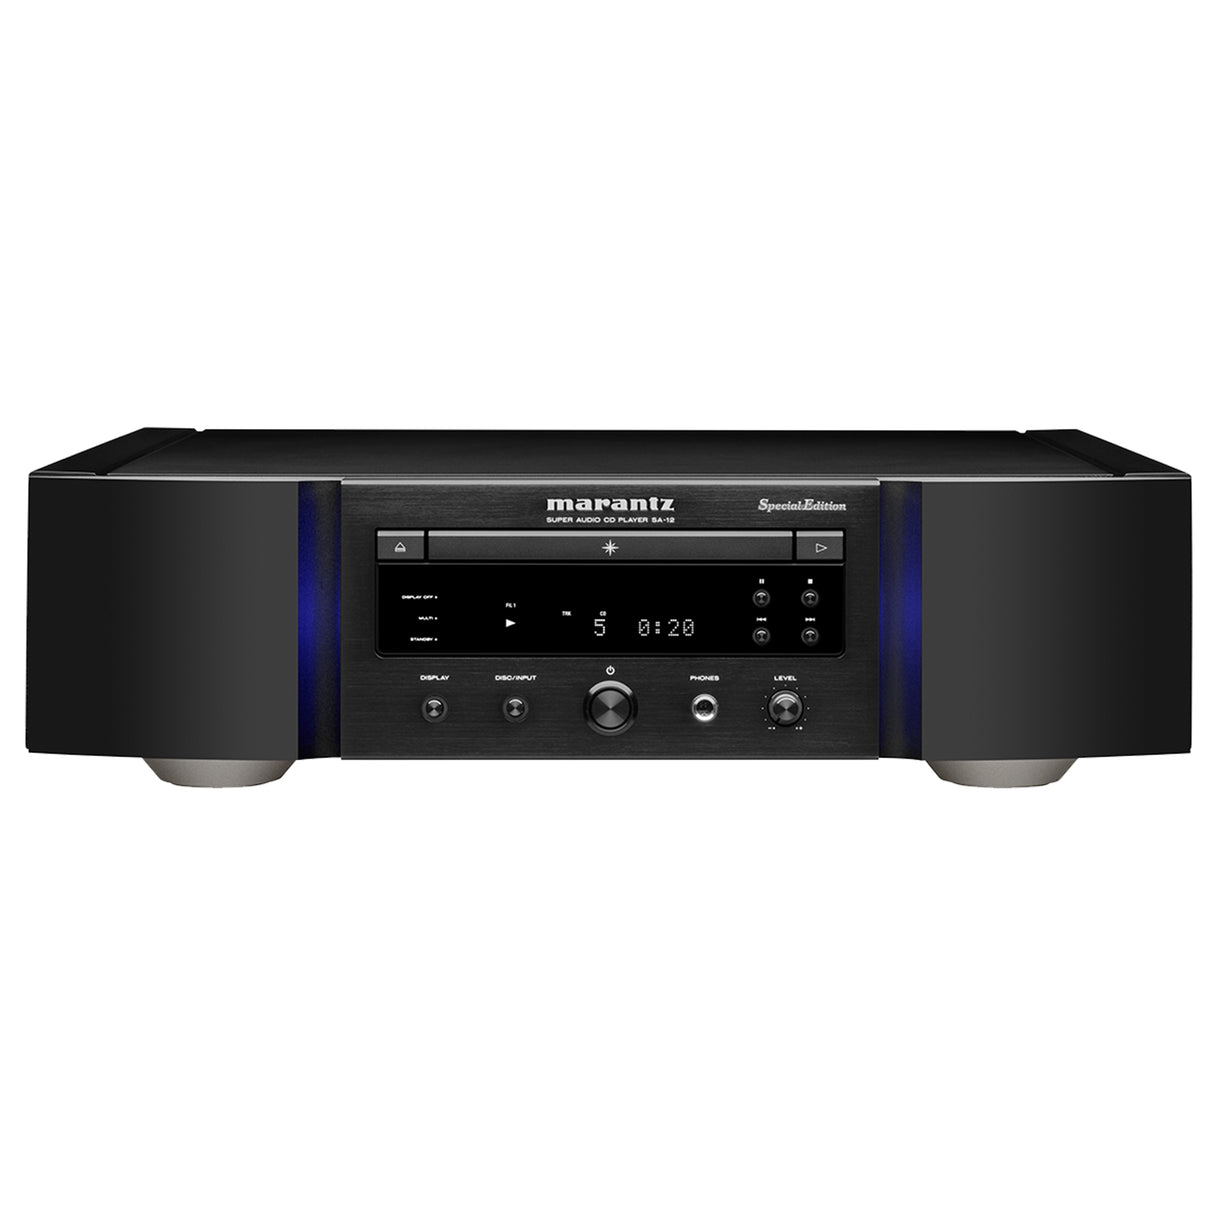 Marantz SA12SE - SACD PlayerSuper Audio CD Player with Inbuilt DAC